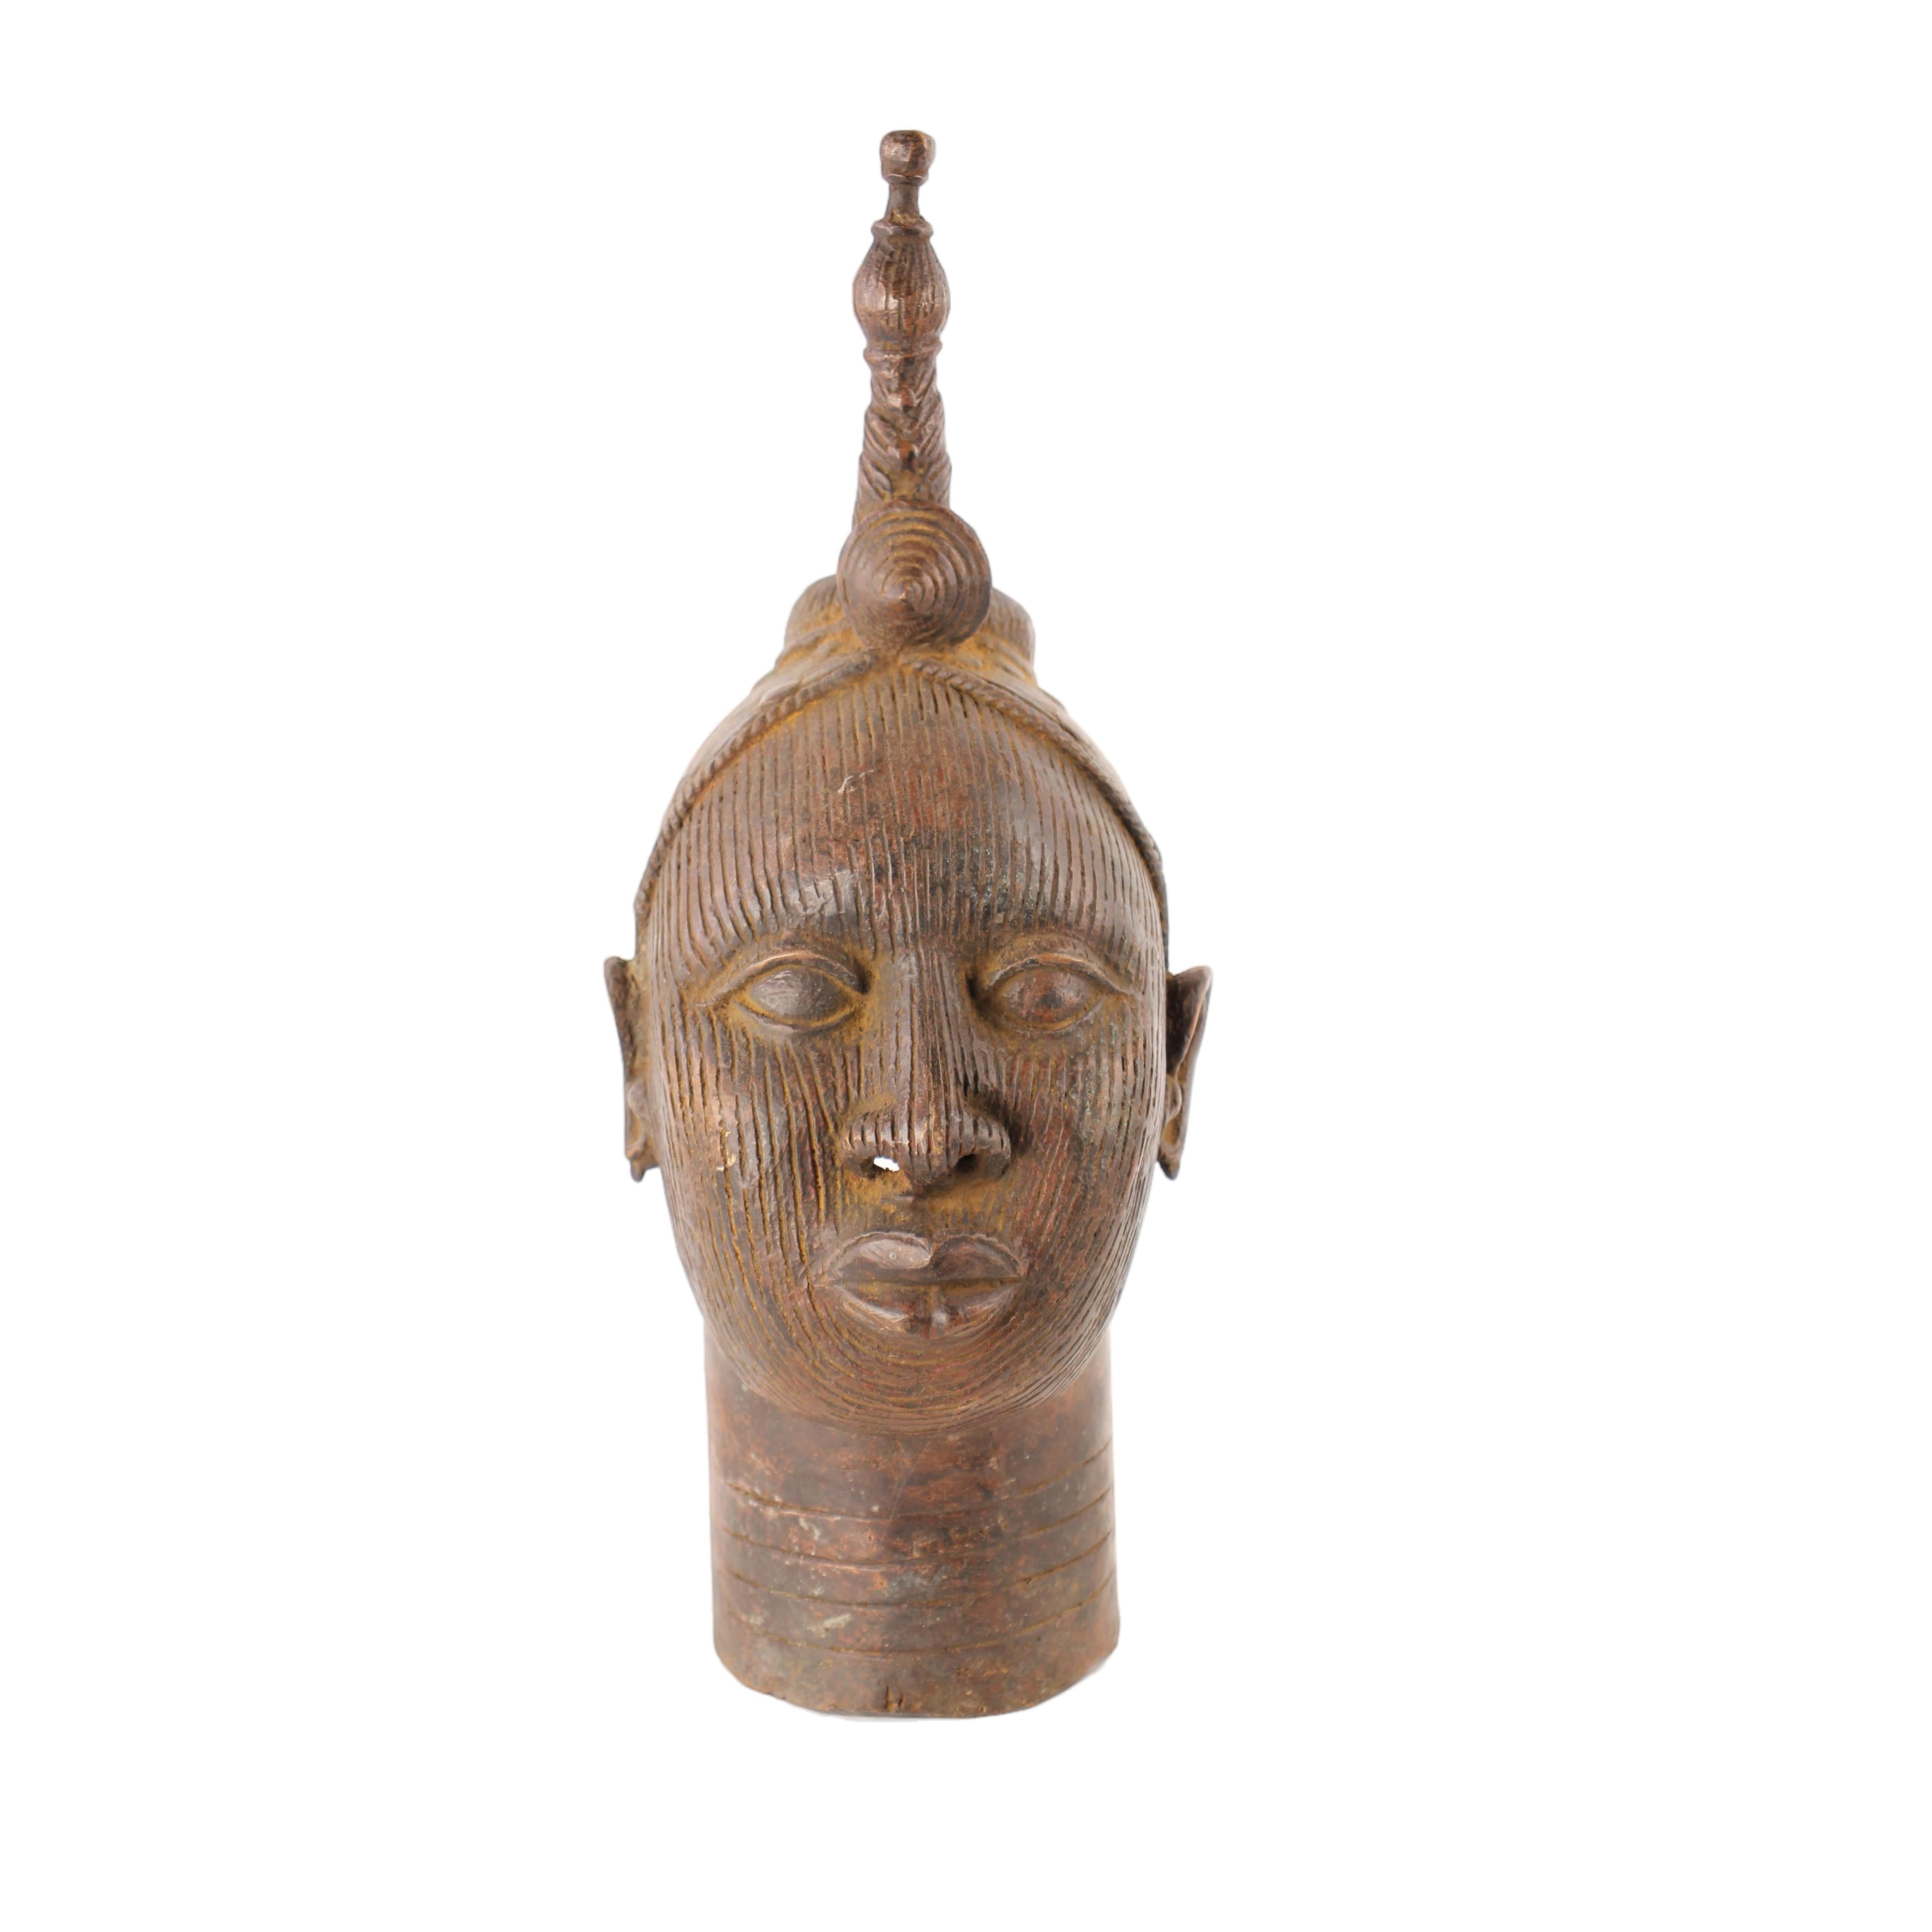 Yoruba Tribe Heads ~15.0" Tall